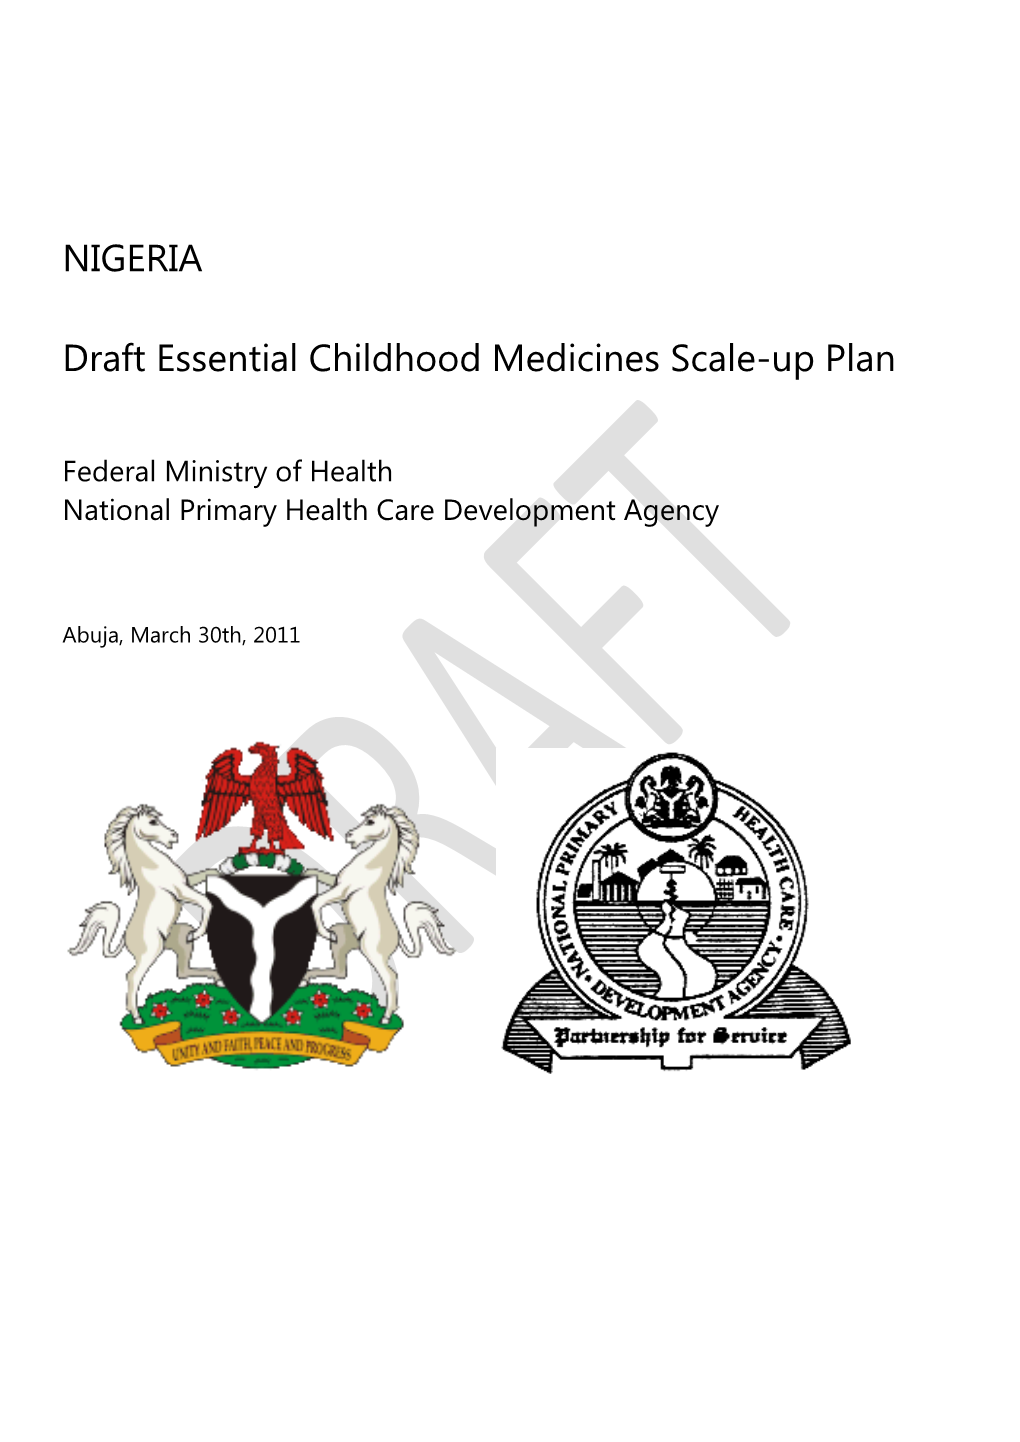 NIGERIA Draft Essential Childhood Medicines Scale-Up Plan